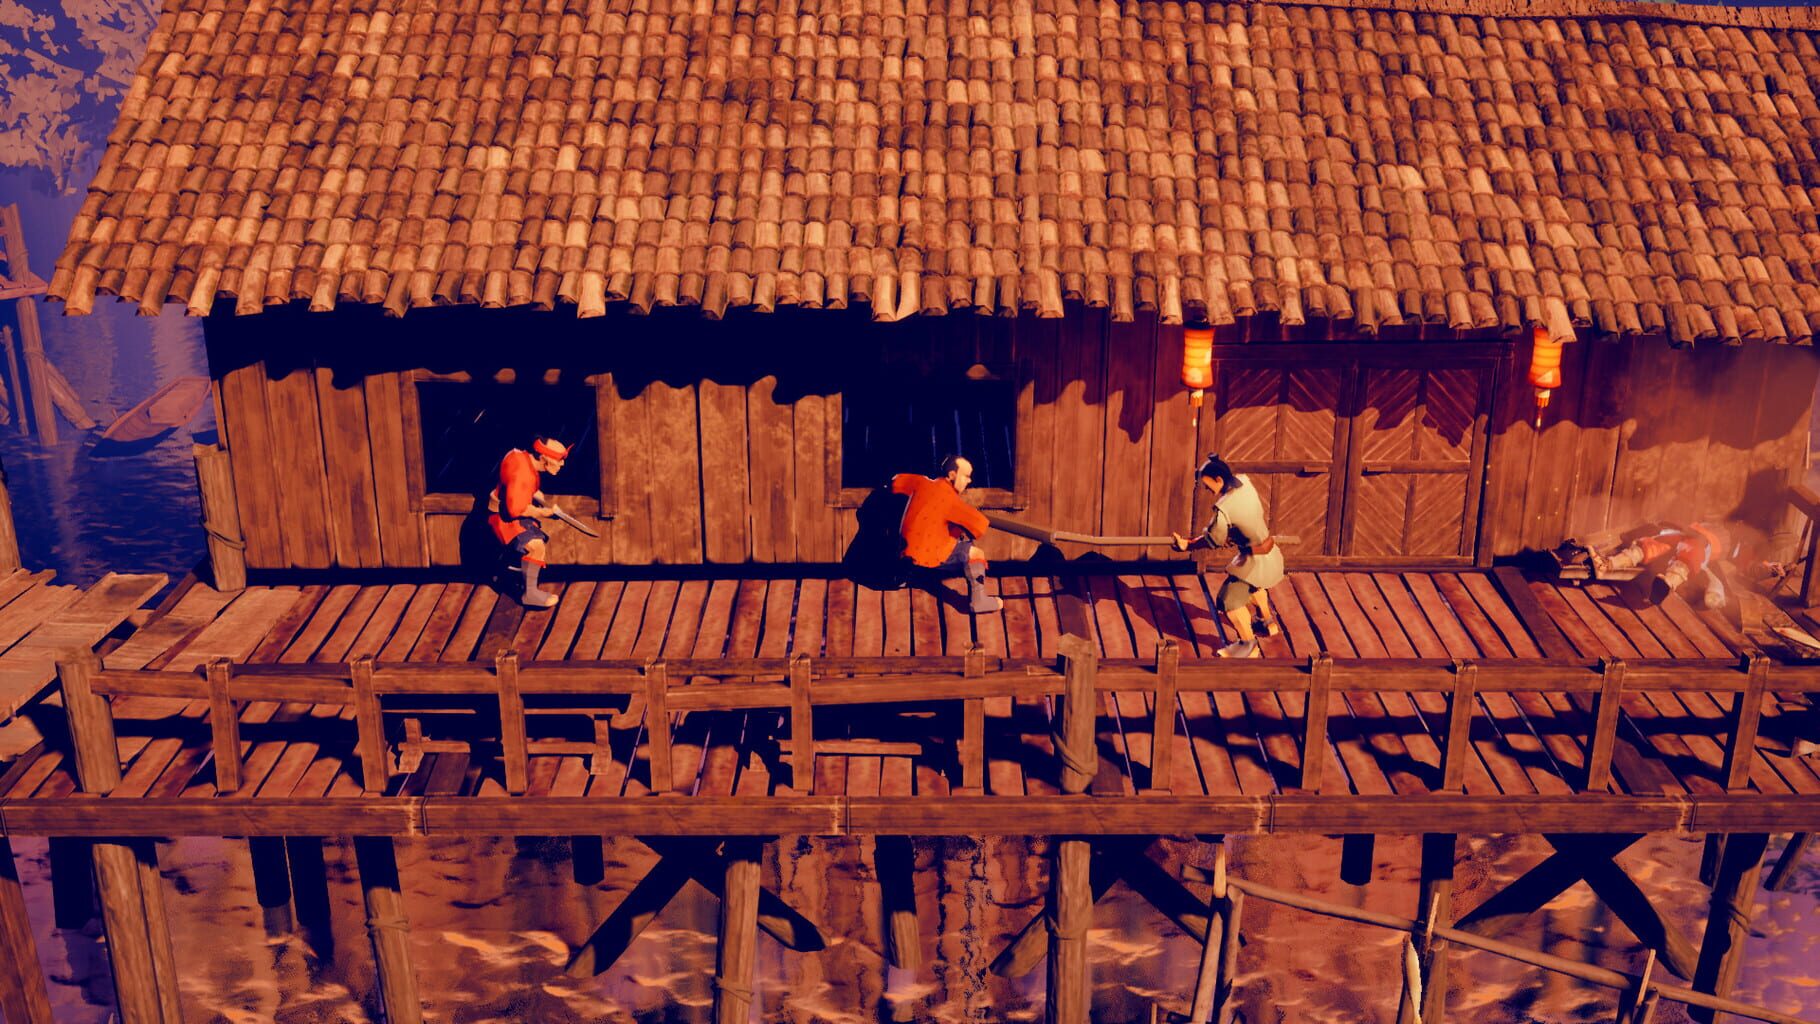 9 Monkeys of Shaolin screenshot